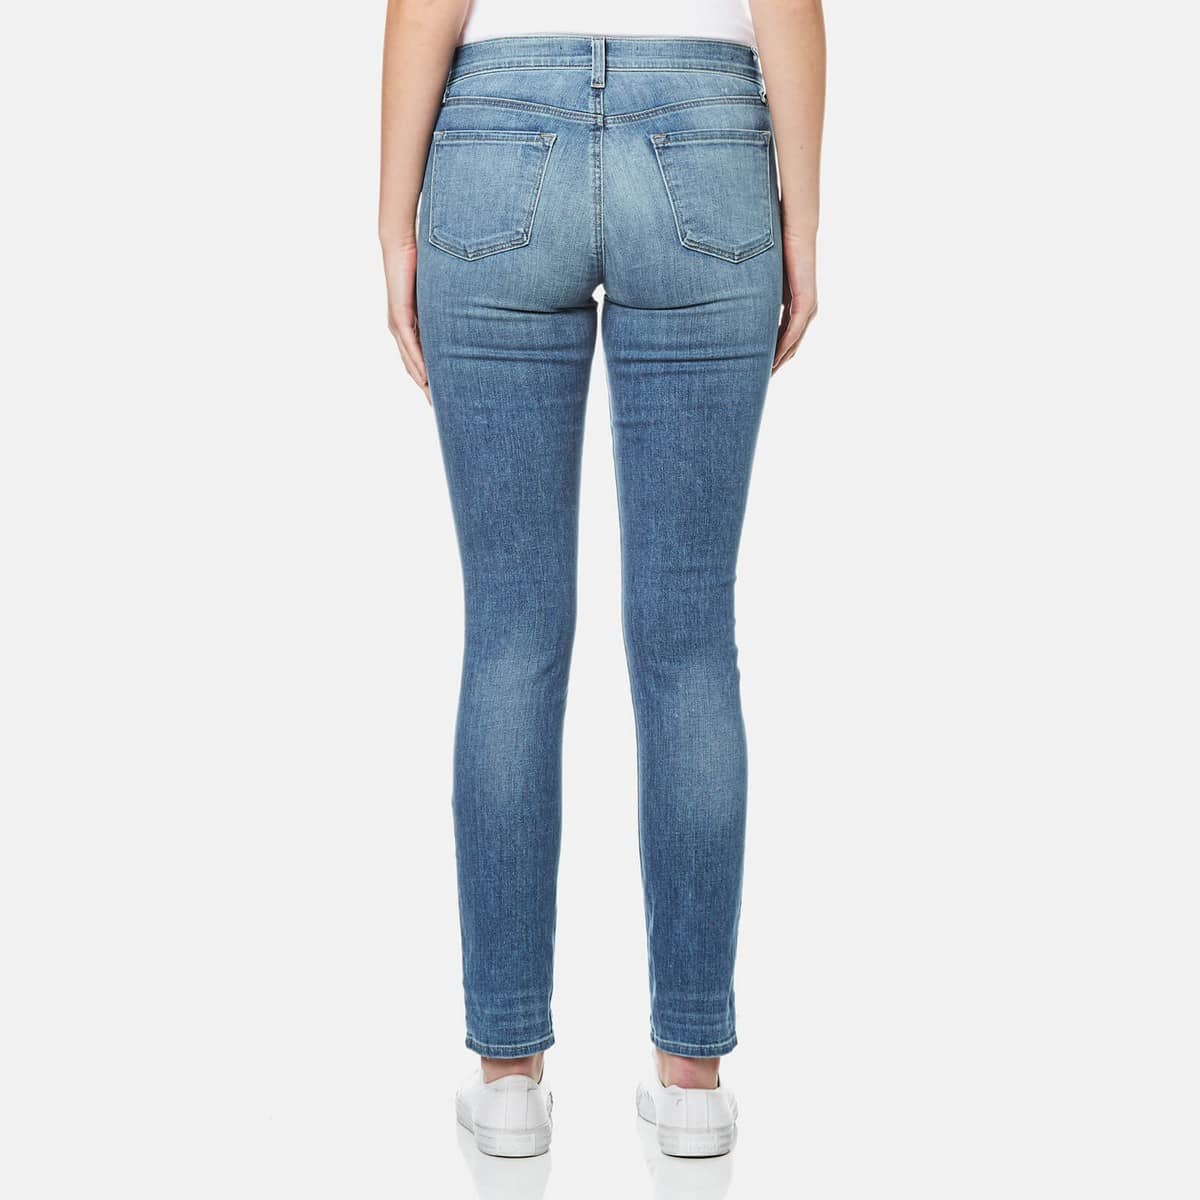 Interpunctie pepermunt aanbidden J Brand • blauwe skinny leg mid-rise jeans • shop BollyWolly